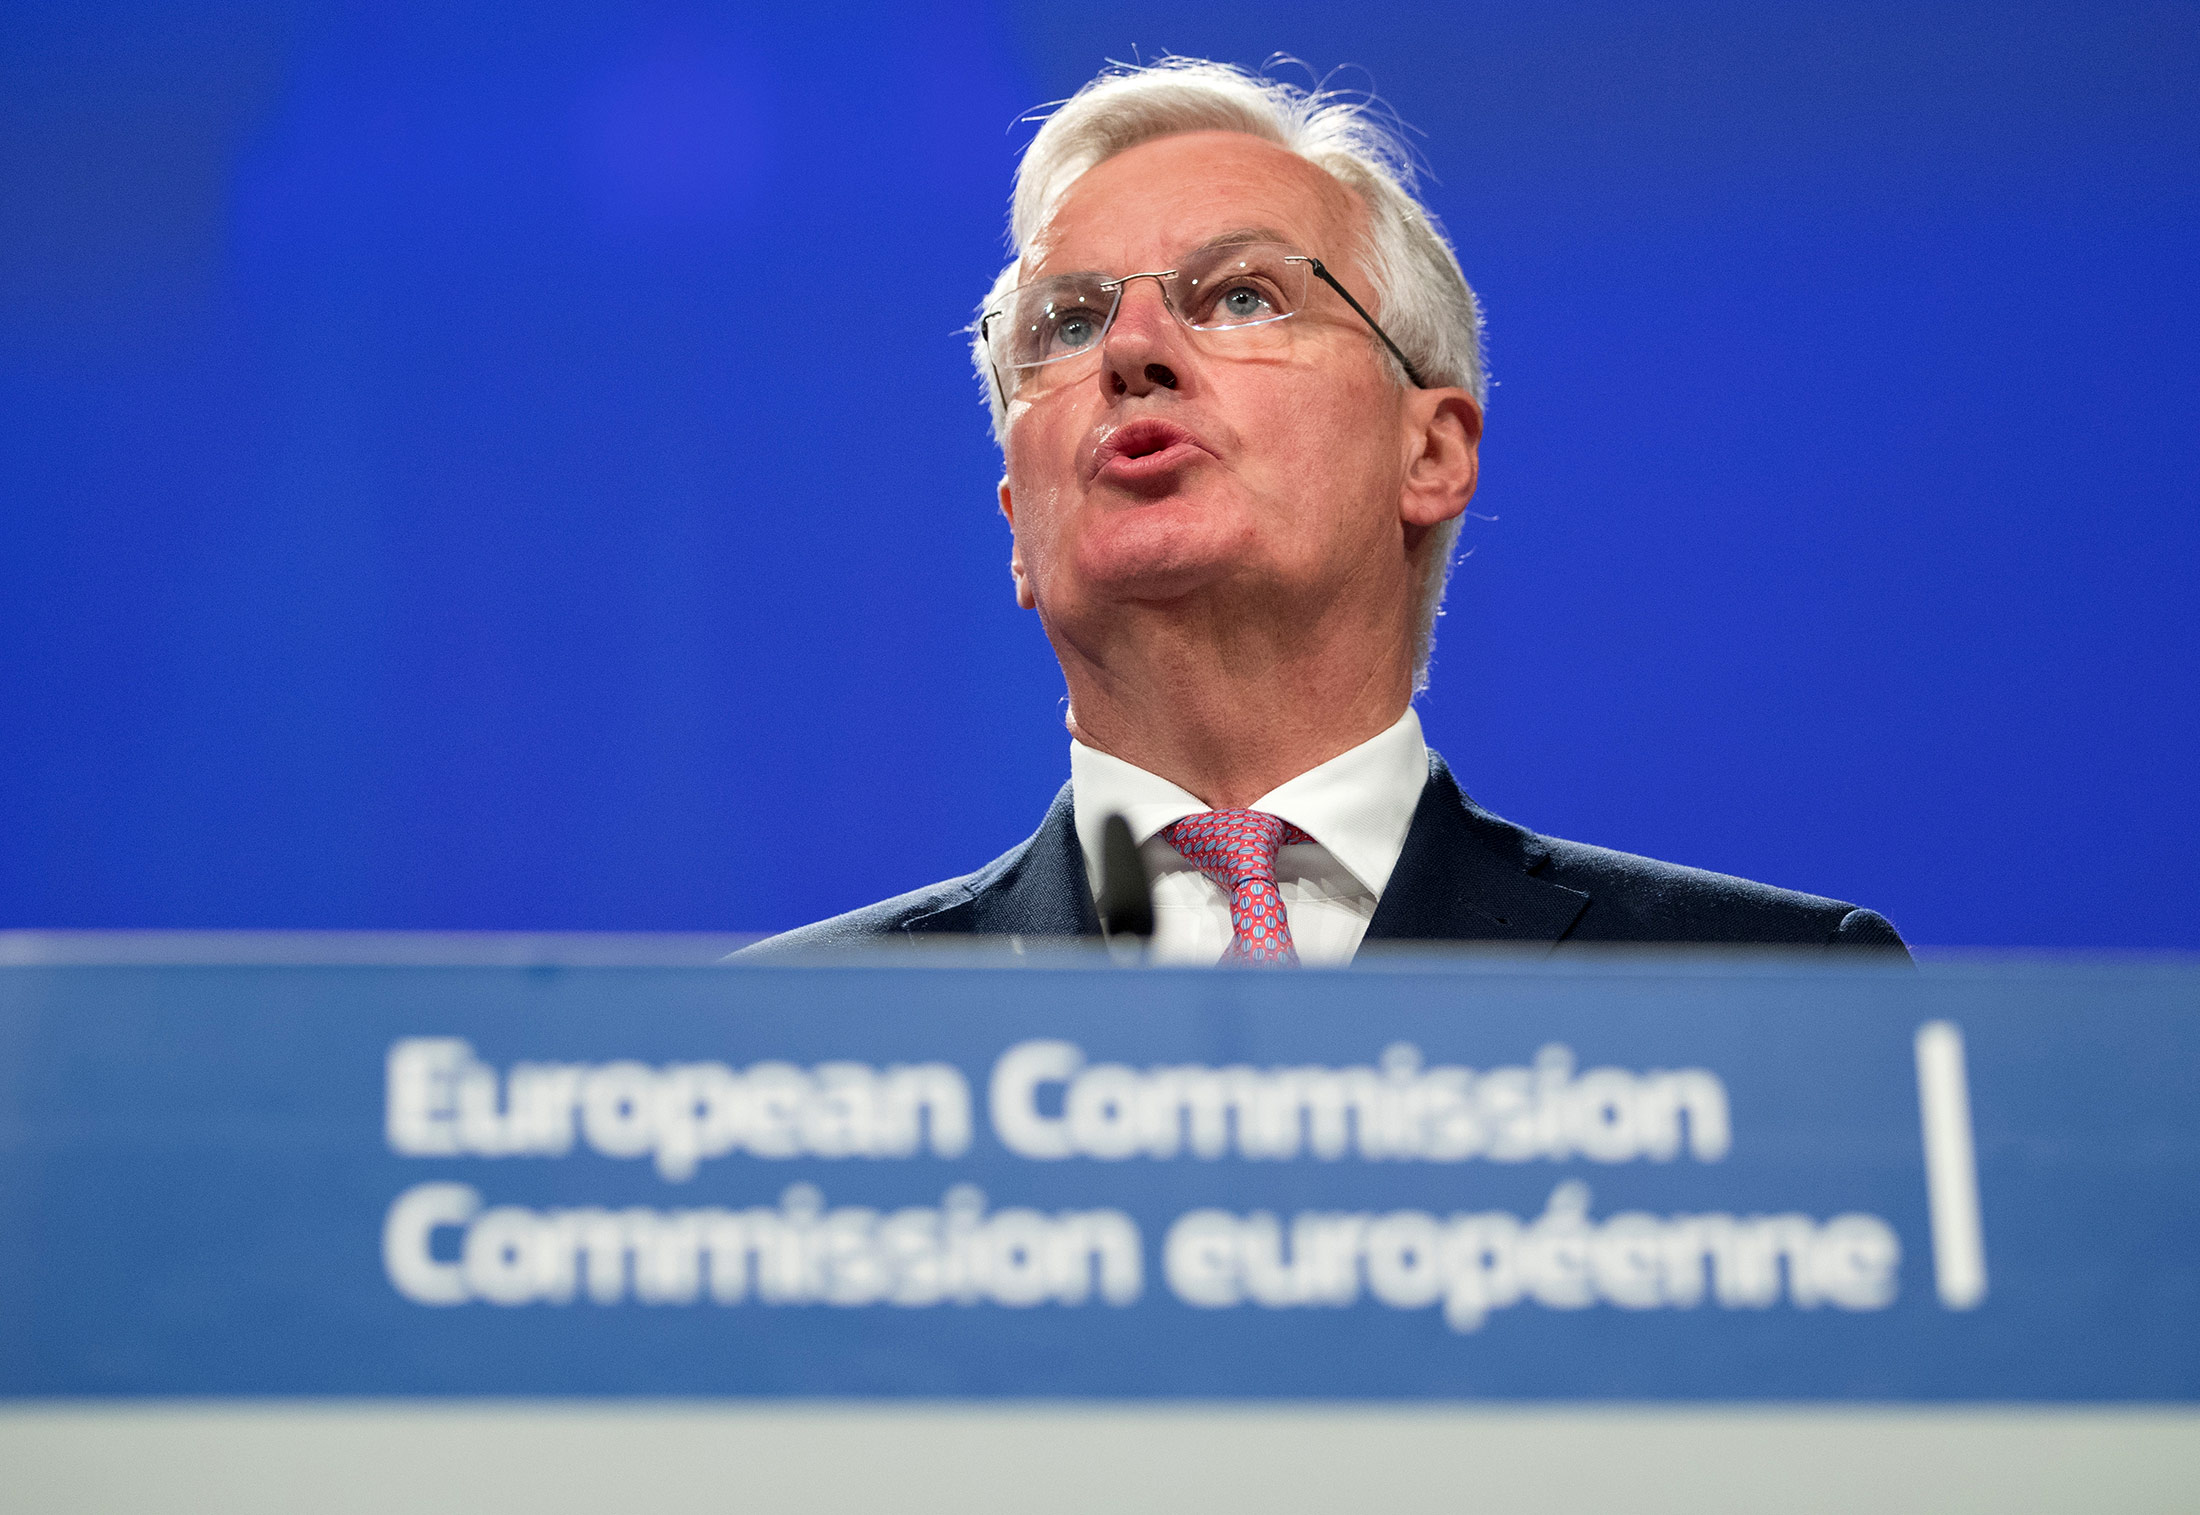 Barnier Warns of Poor Progress in Brexit Talks - Bloomberg